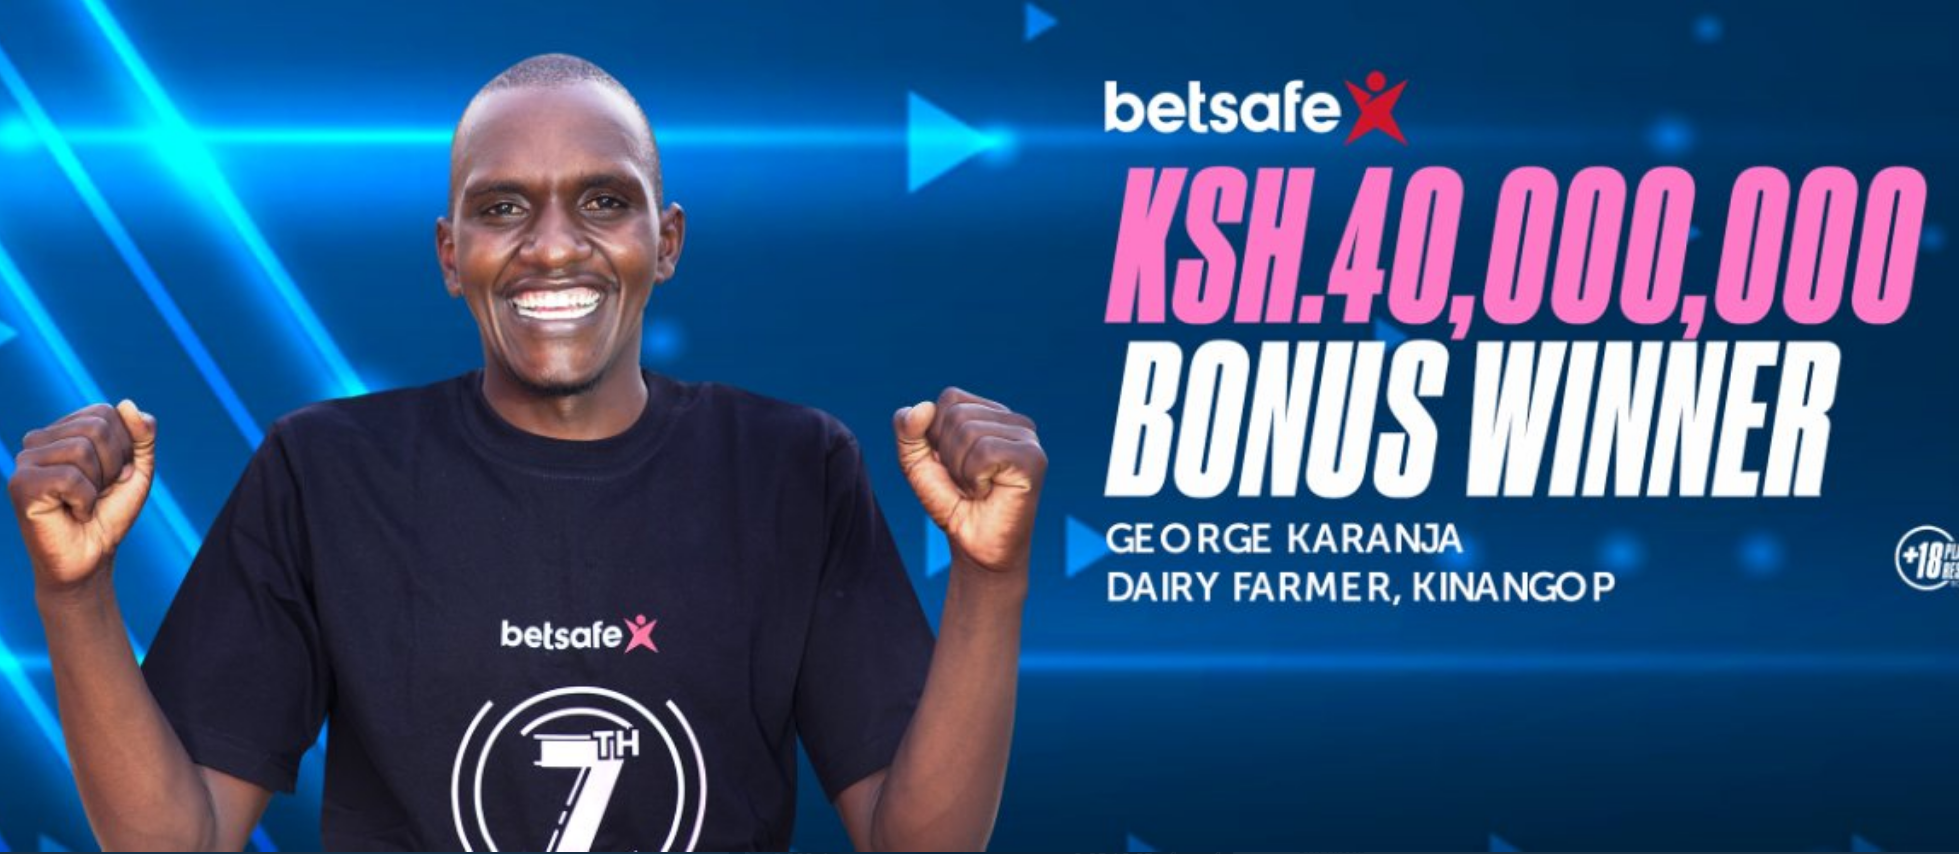 George Karanja is big Sh40,000,000 Betsafe Bonus winner